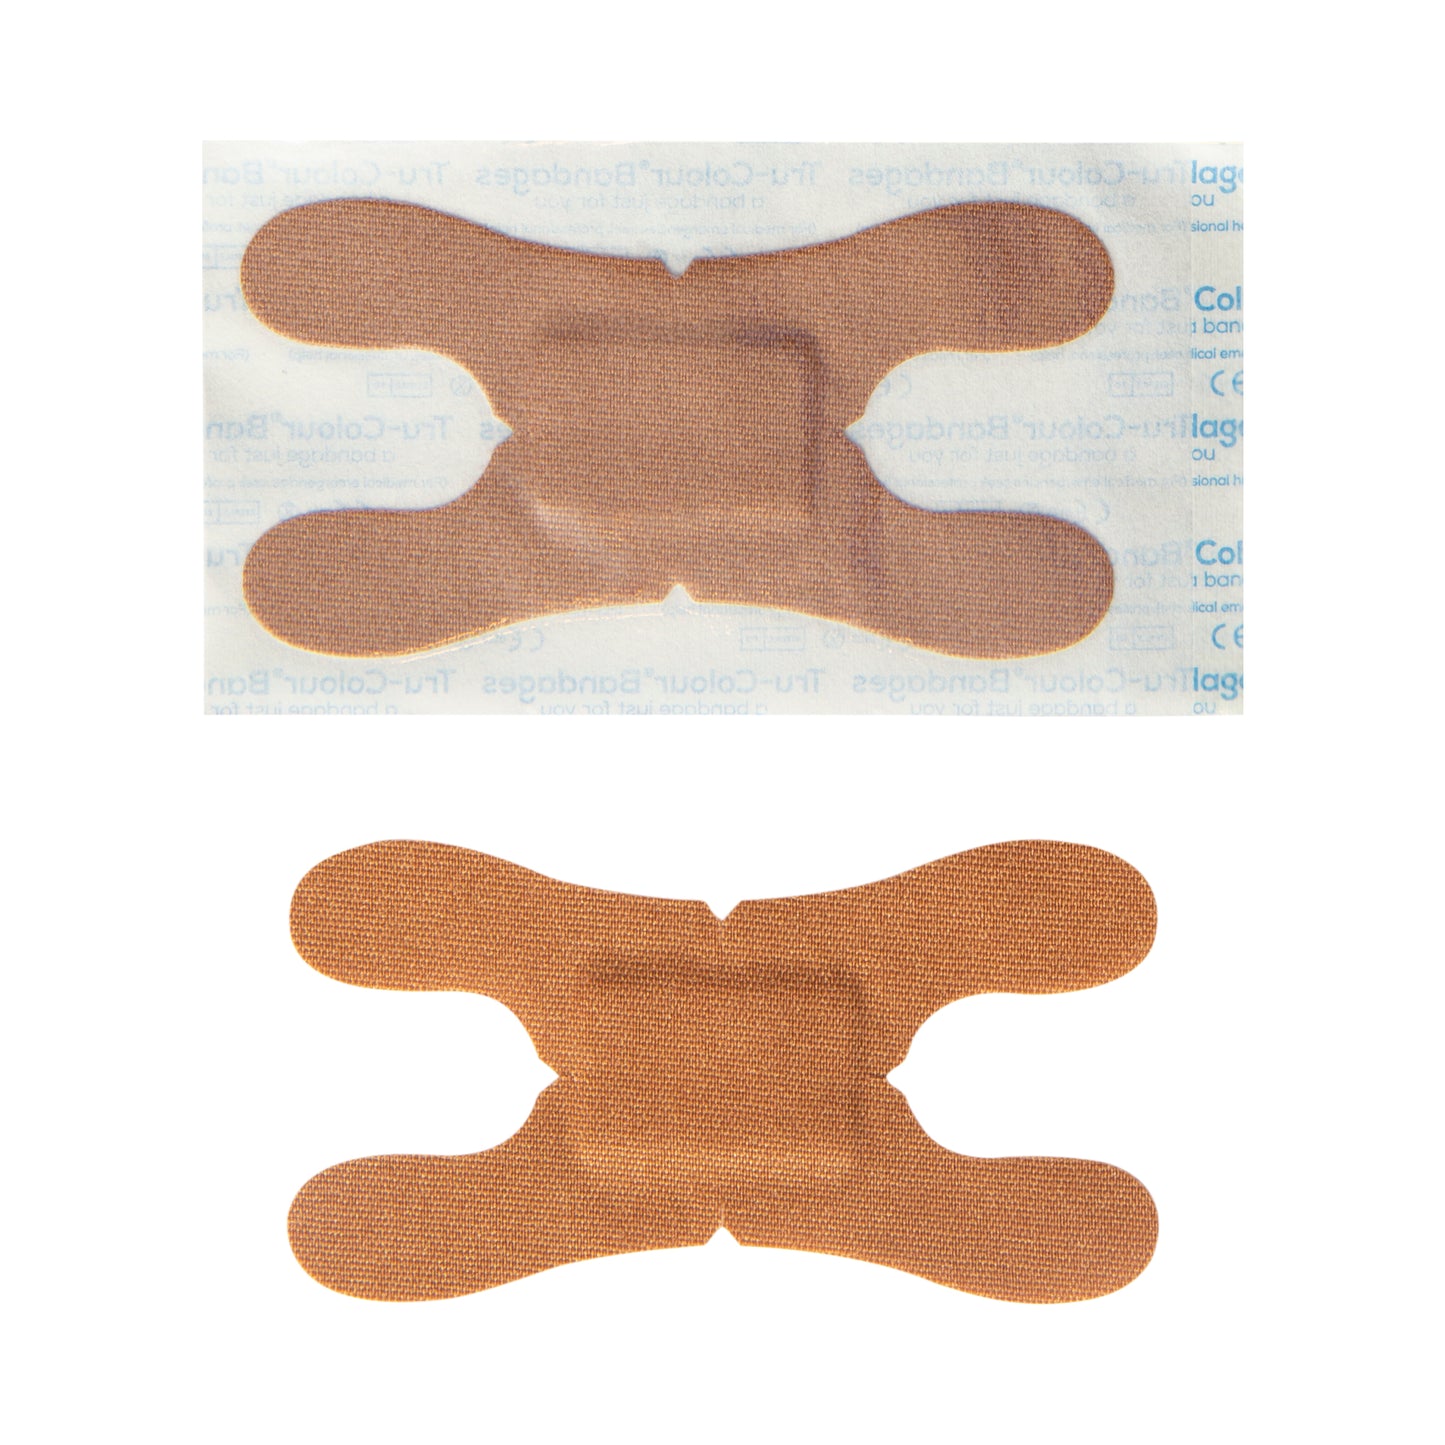 Tru-Colour Skin Tone Fingertip & Knuckle Plasters: Brown Skintone  - 20 count